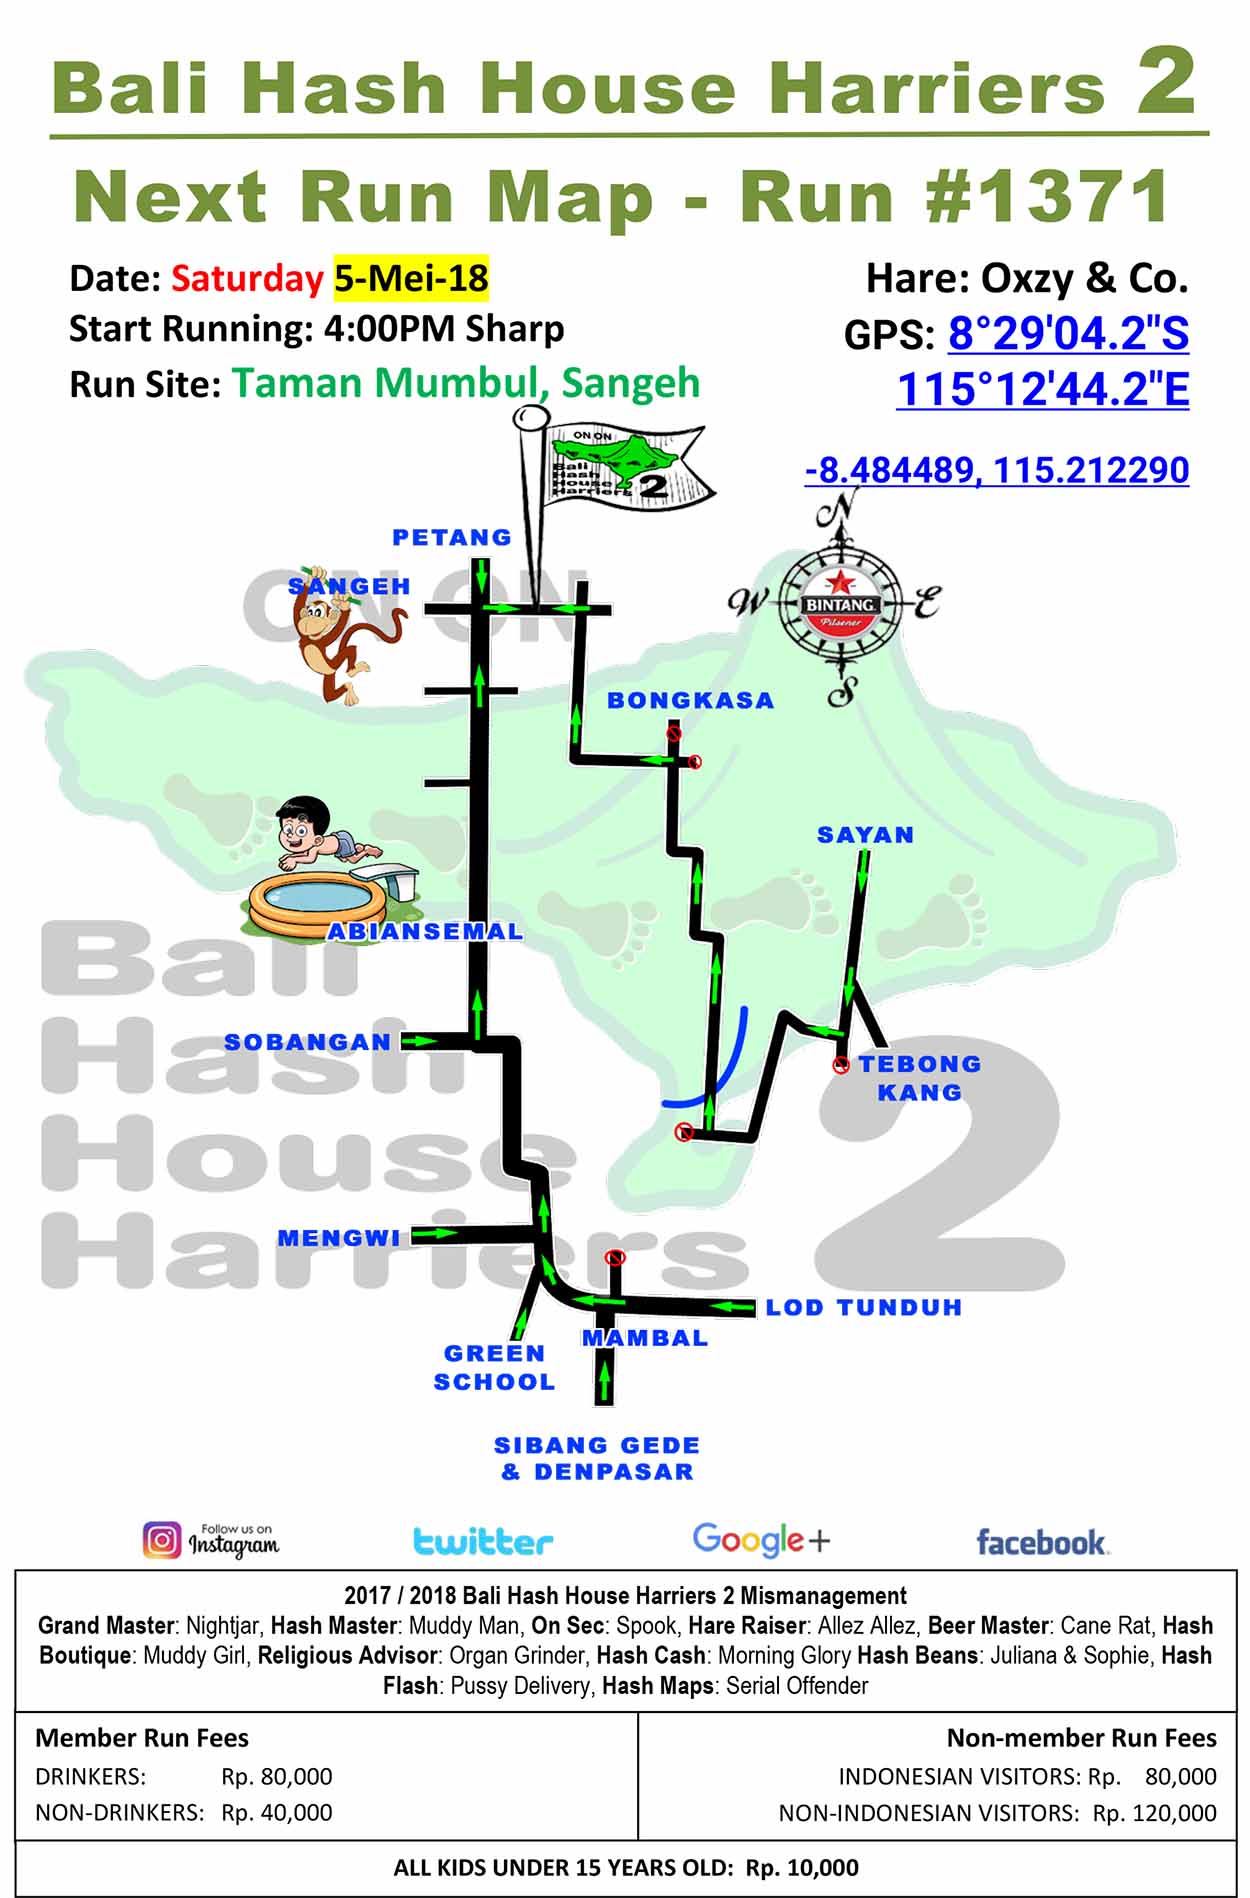 Bali Hash House Harriers 2 BHHH2 Next Run Map #1371 Taman Mumbul Sangeh 5-Mei-18